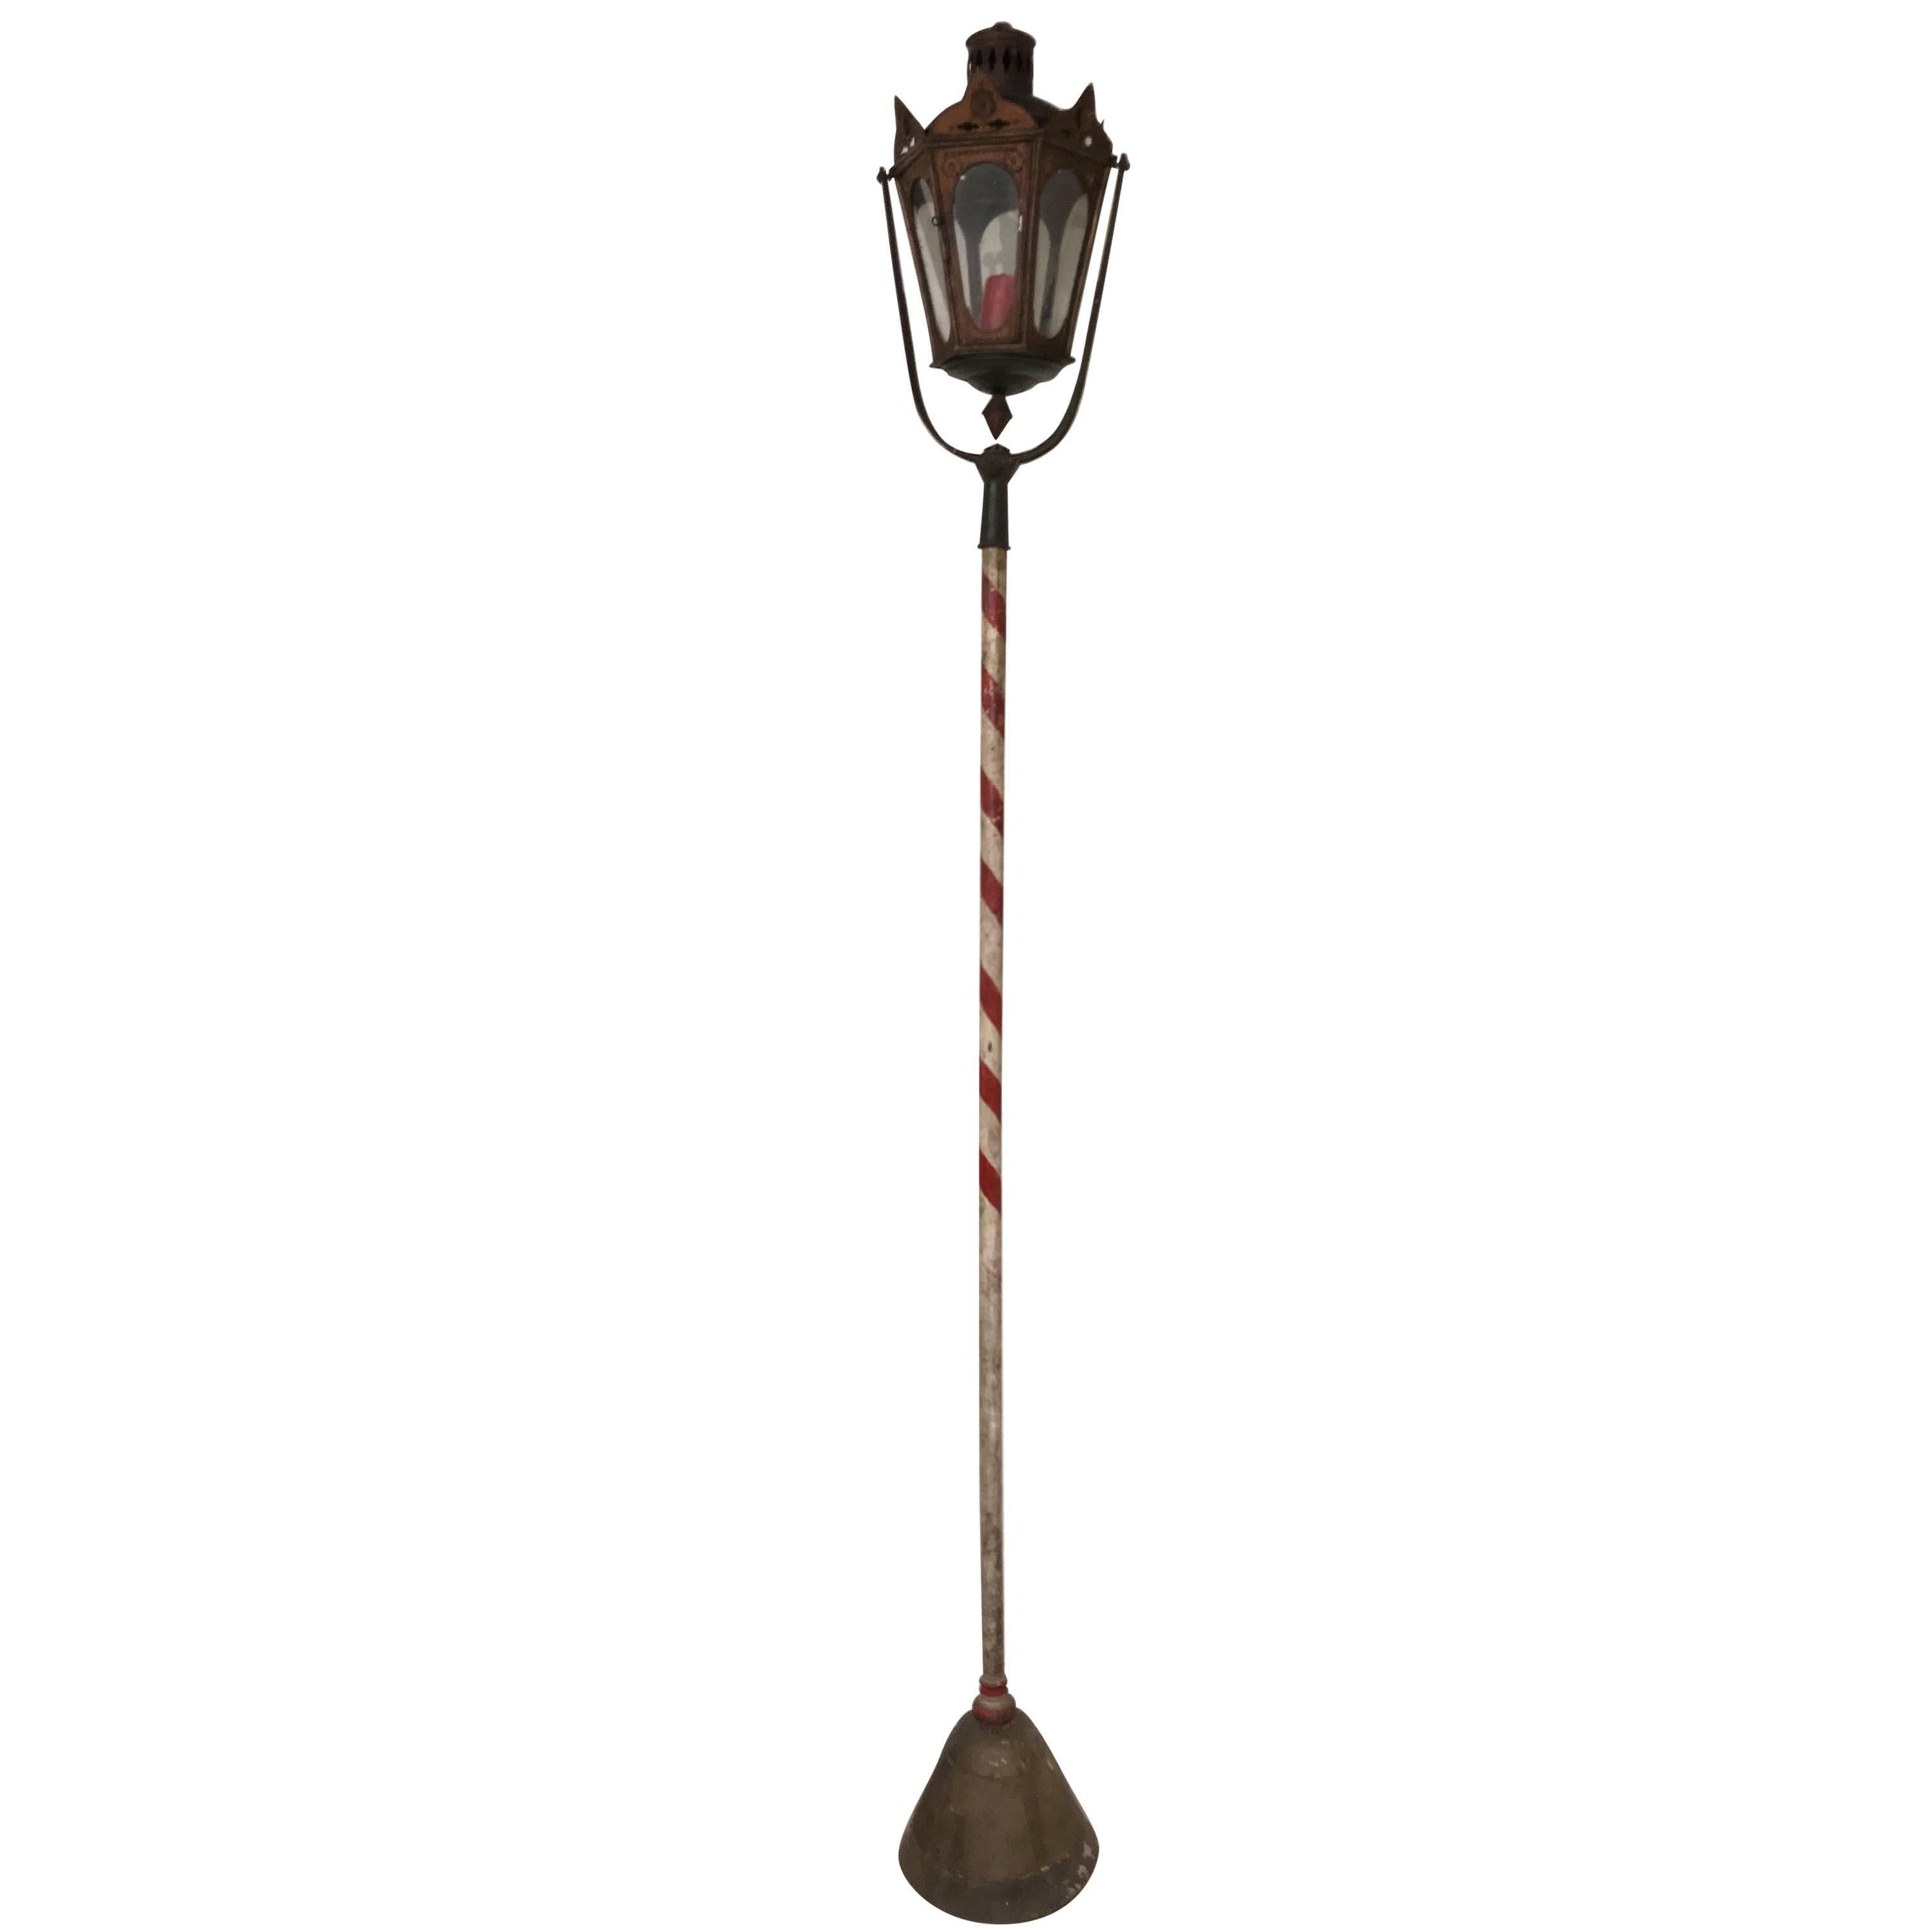 19th Century Italian or Venetian Gondola Lamp in Old Color For Sale